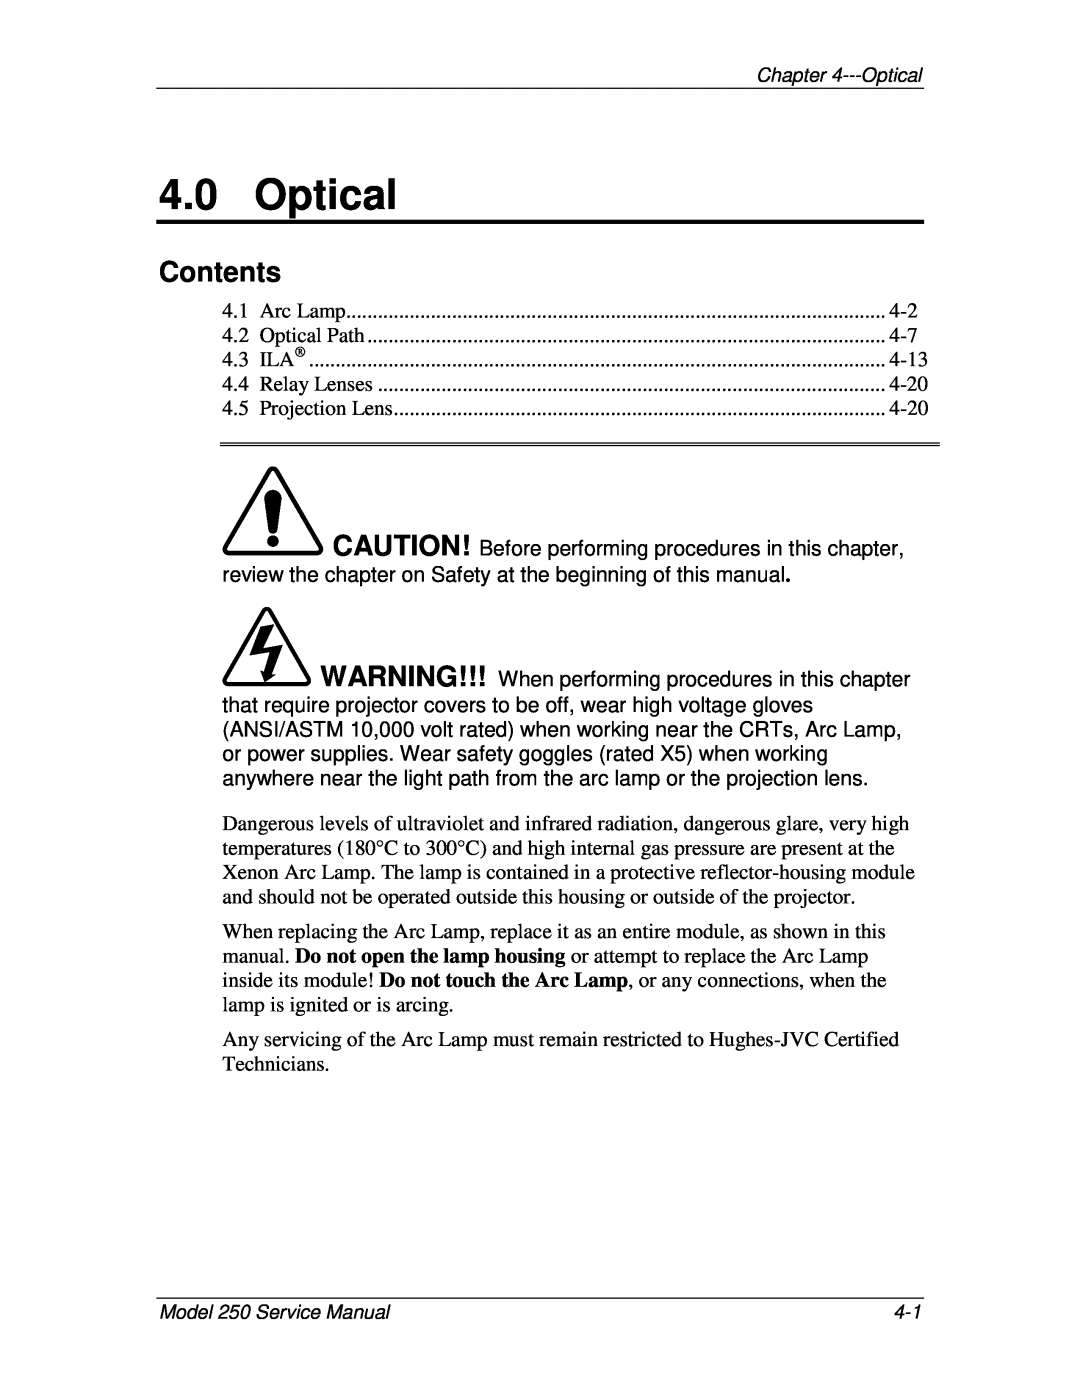 JVC 250 service manual Optical, Contents 